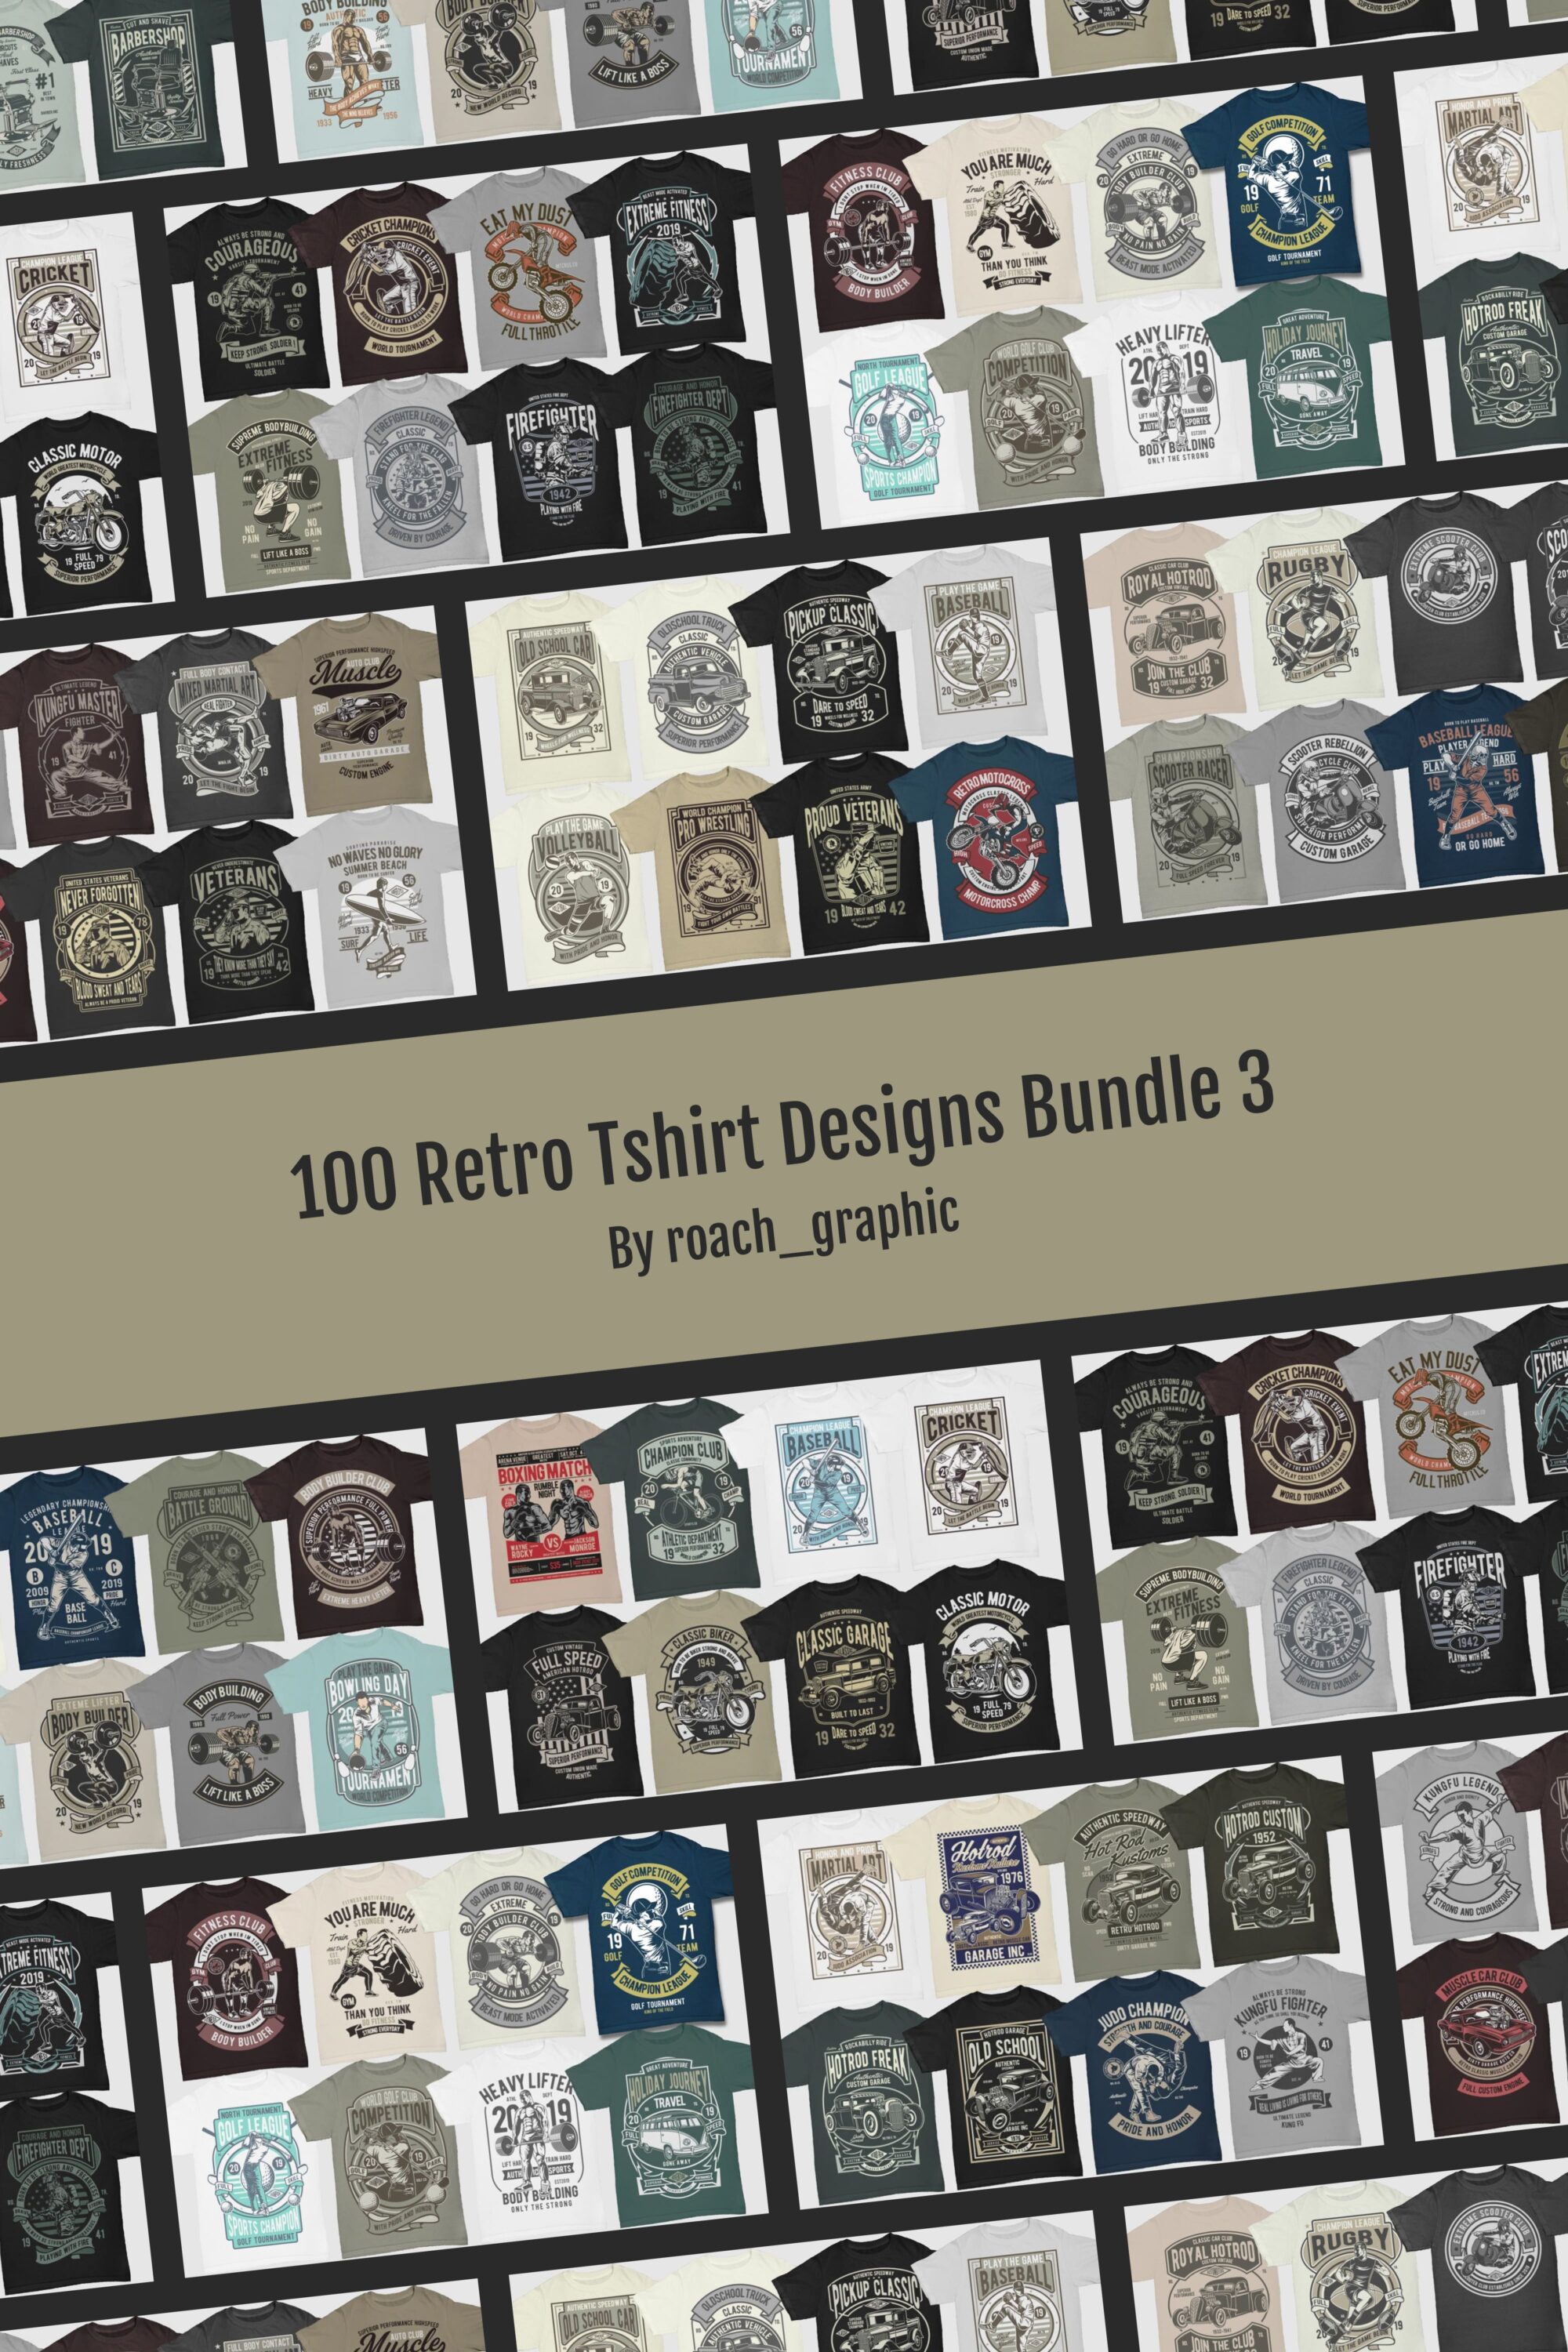 100 Retro Tshirt Designs Bundle 3 pinterest image.